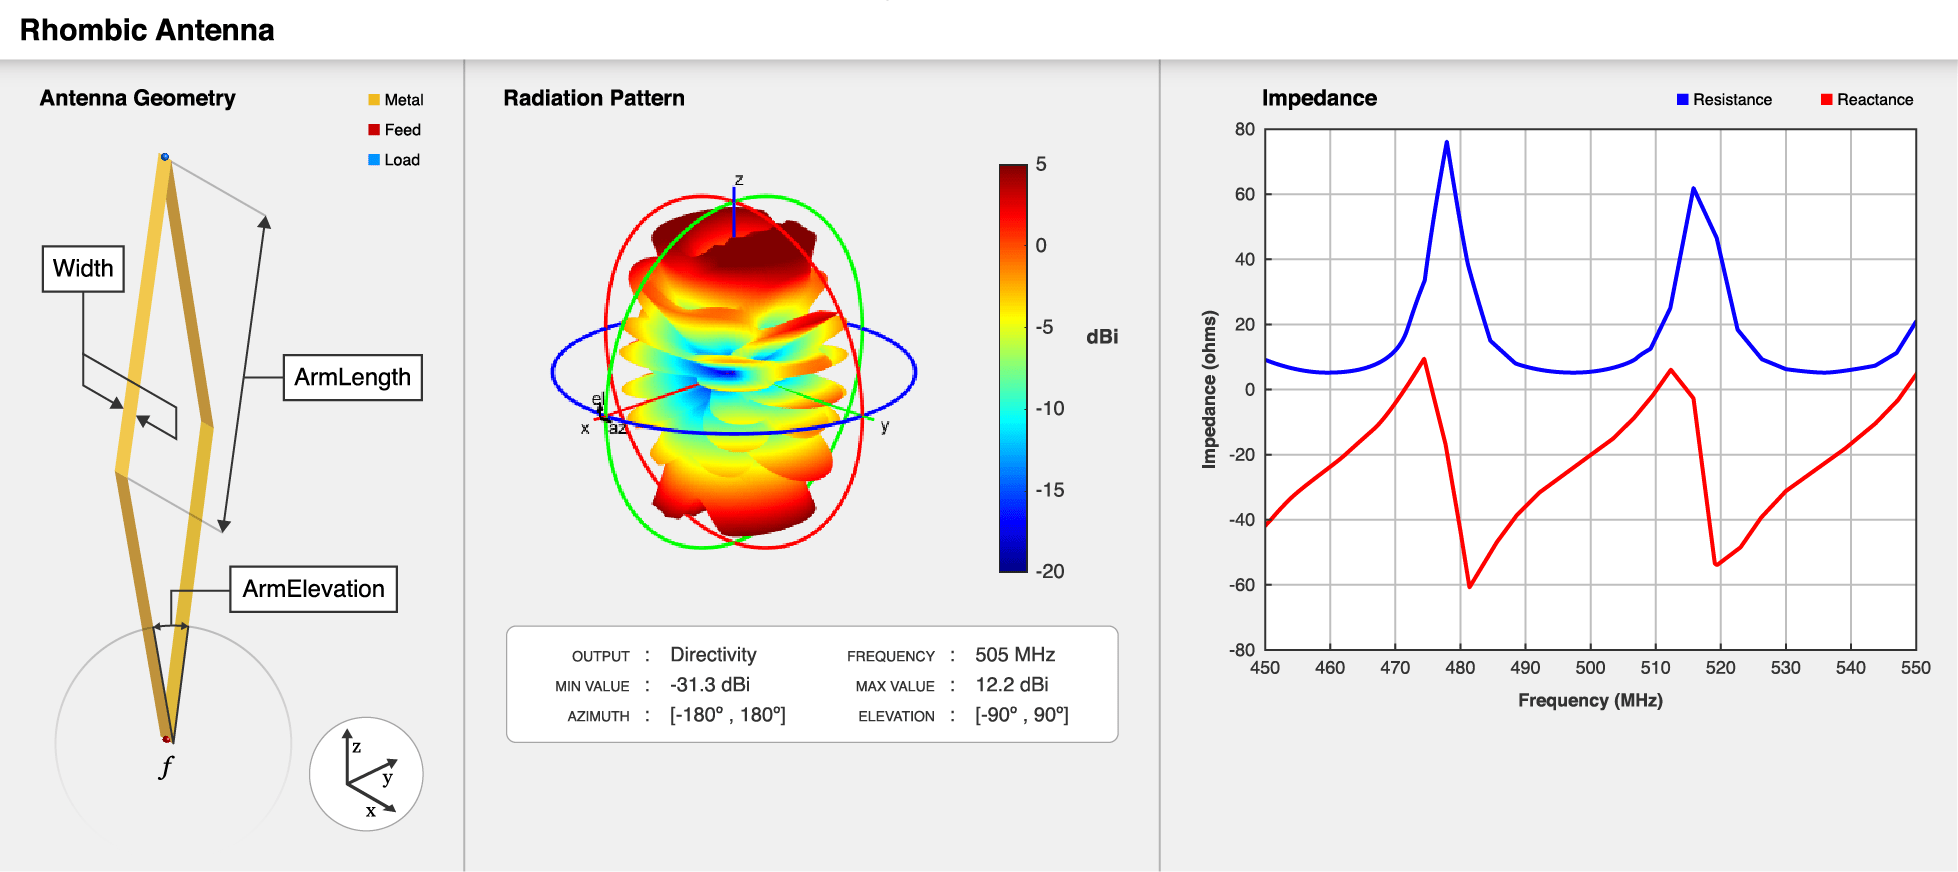 Rhombic antenna geometry, default radiation pattern, and impedance plot.